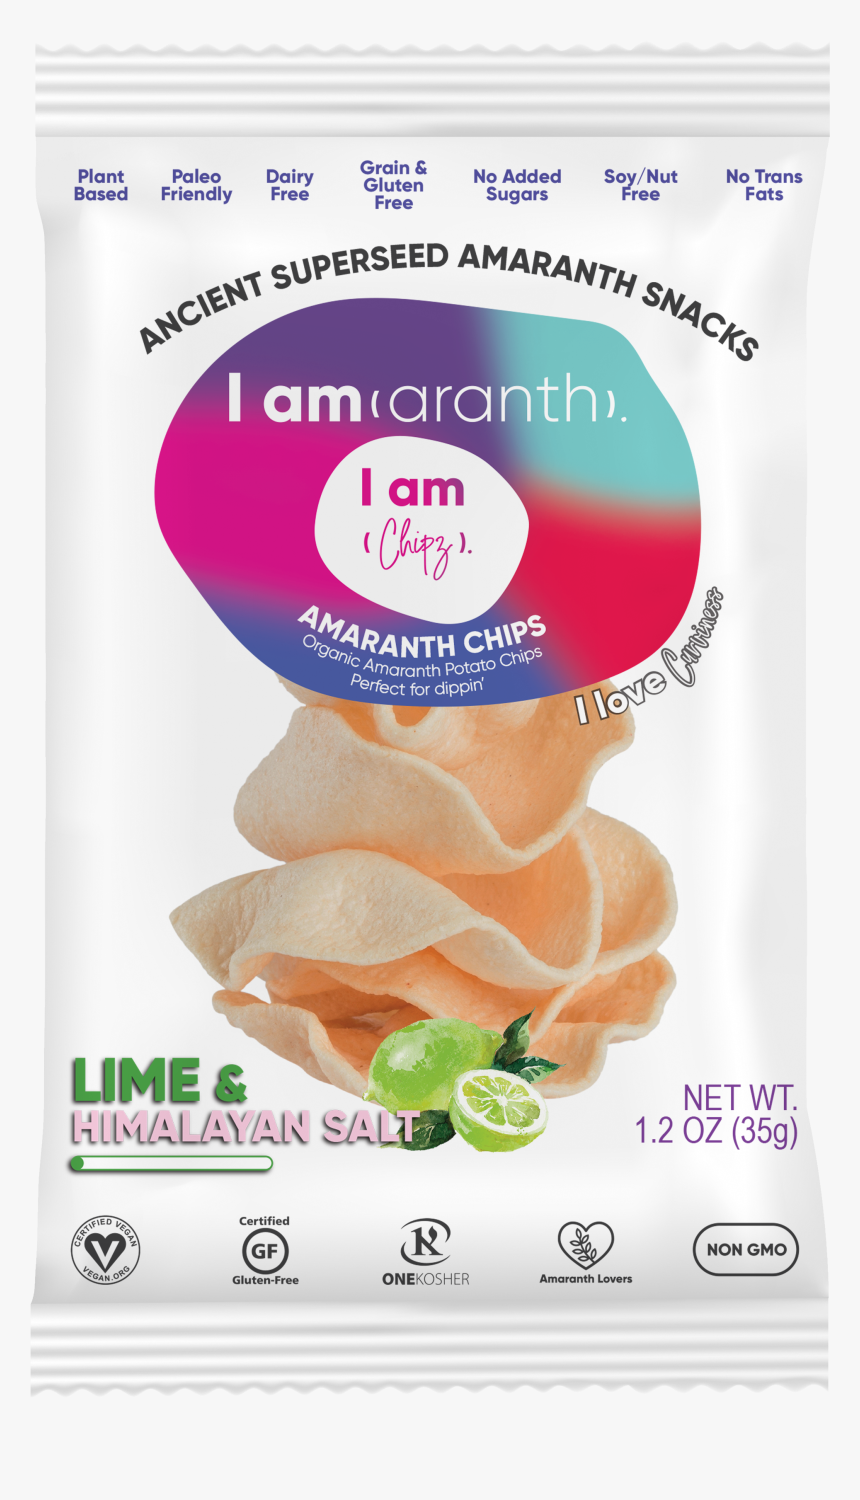 Lime & Himalayan Salt Organic Amaranth Potato Chips - Am Aranth, HD Png Download, Free Download